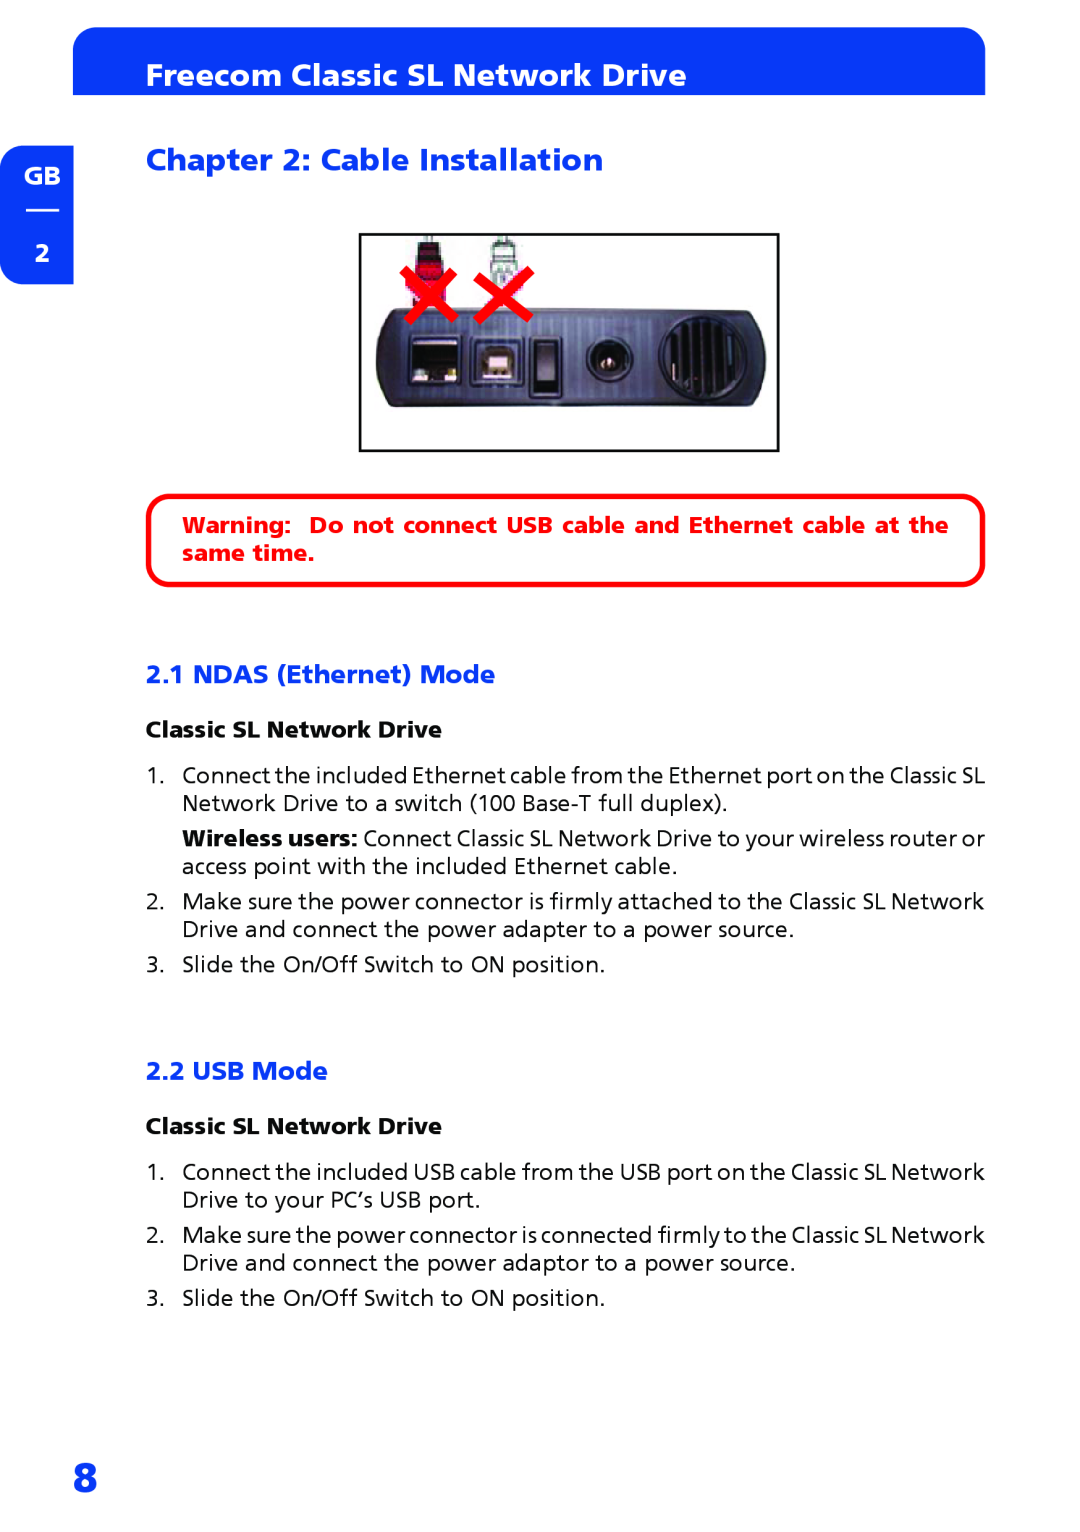 Freecom Technologies Network hard drive manual Freecom Classic SL Network Drive, NDAS Ethernet Mode, USB Mode 